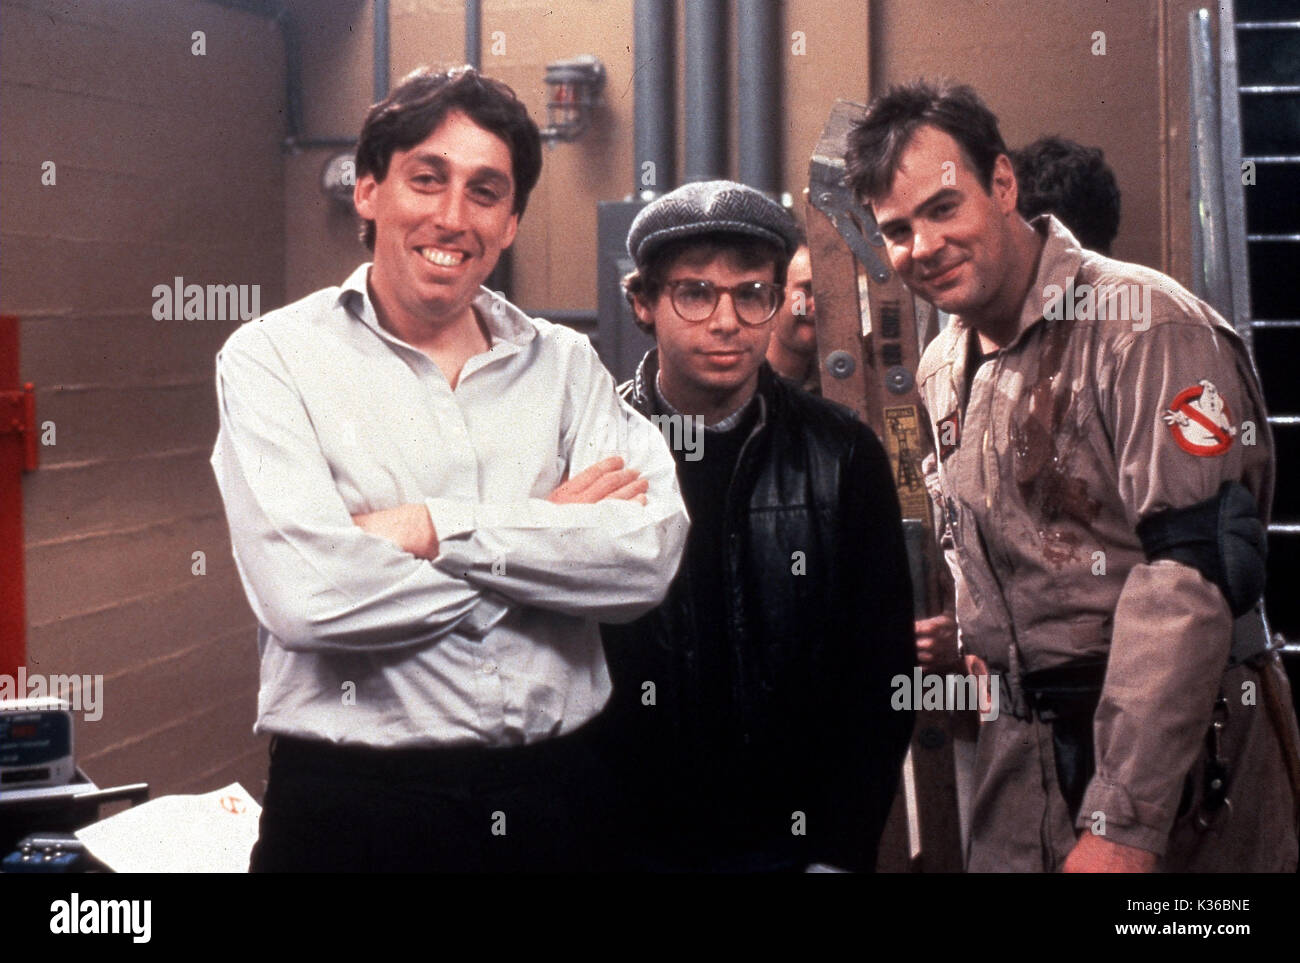 GHOSTBUSTERS 2 Regisseur Ivan Reitman, Rick Moranis, Dan Ackroyd Datum: 1989 Stockfoto